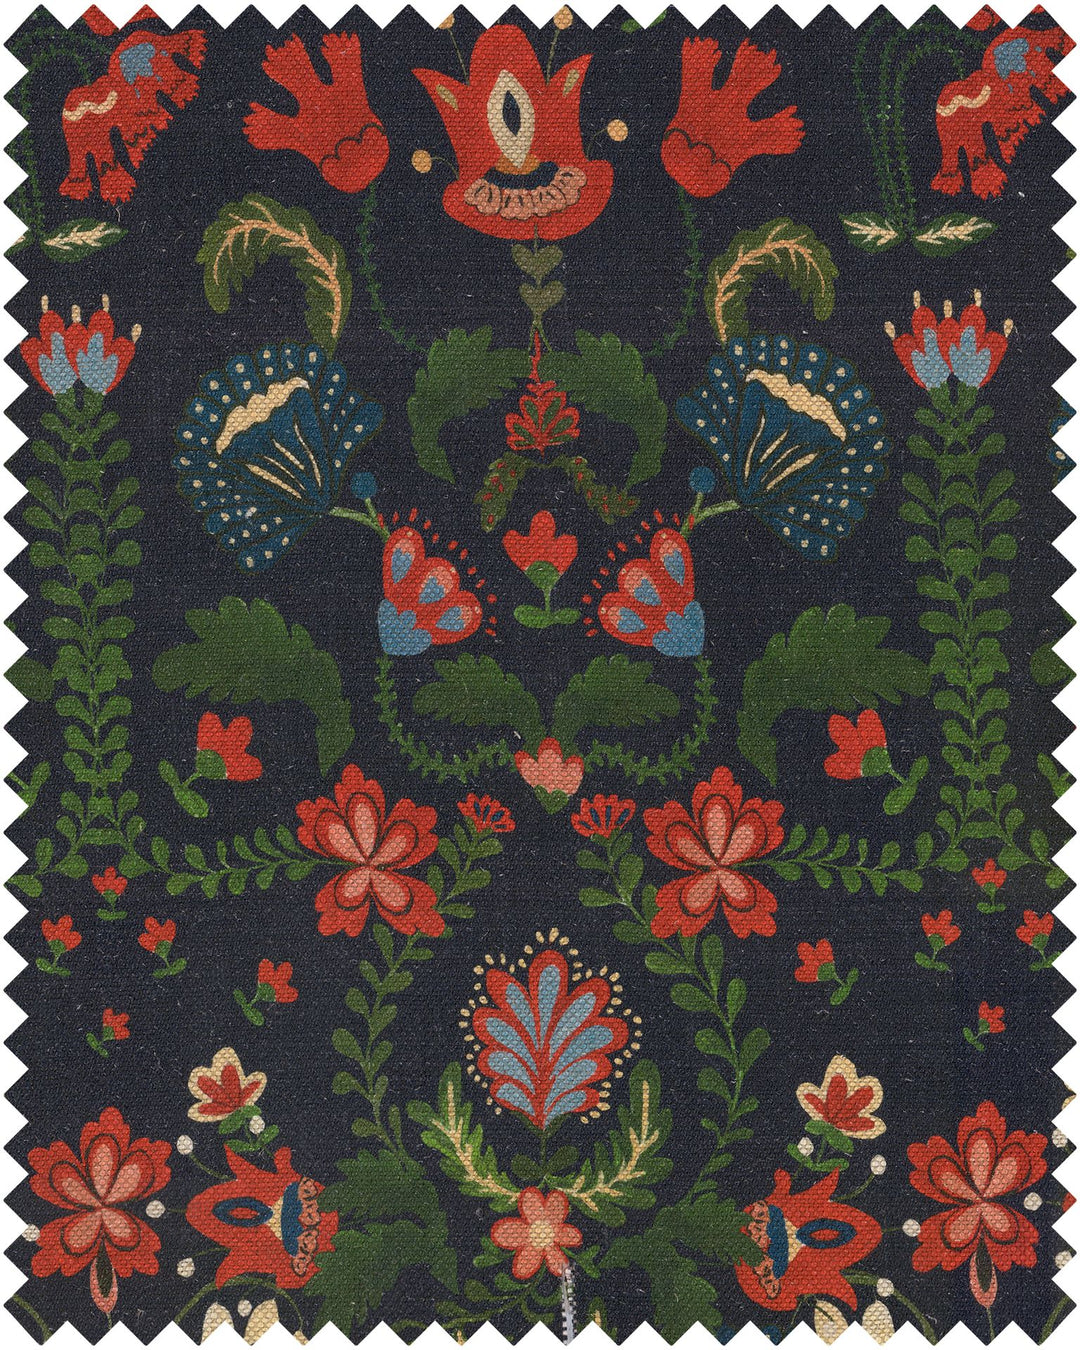 zabola-linen-weave-fabric-transylvanian-roots-folk-linen-design-printed-fabric-green-red-blue